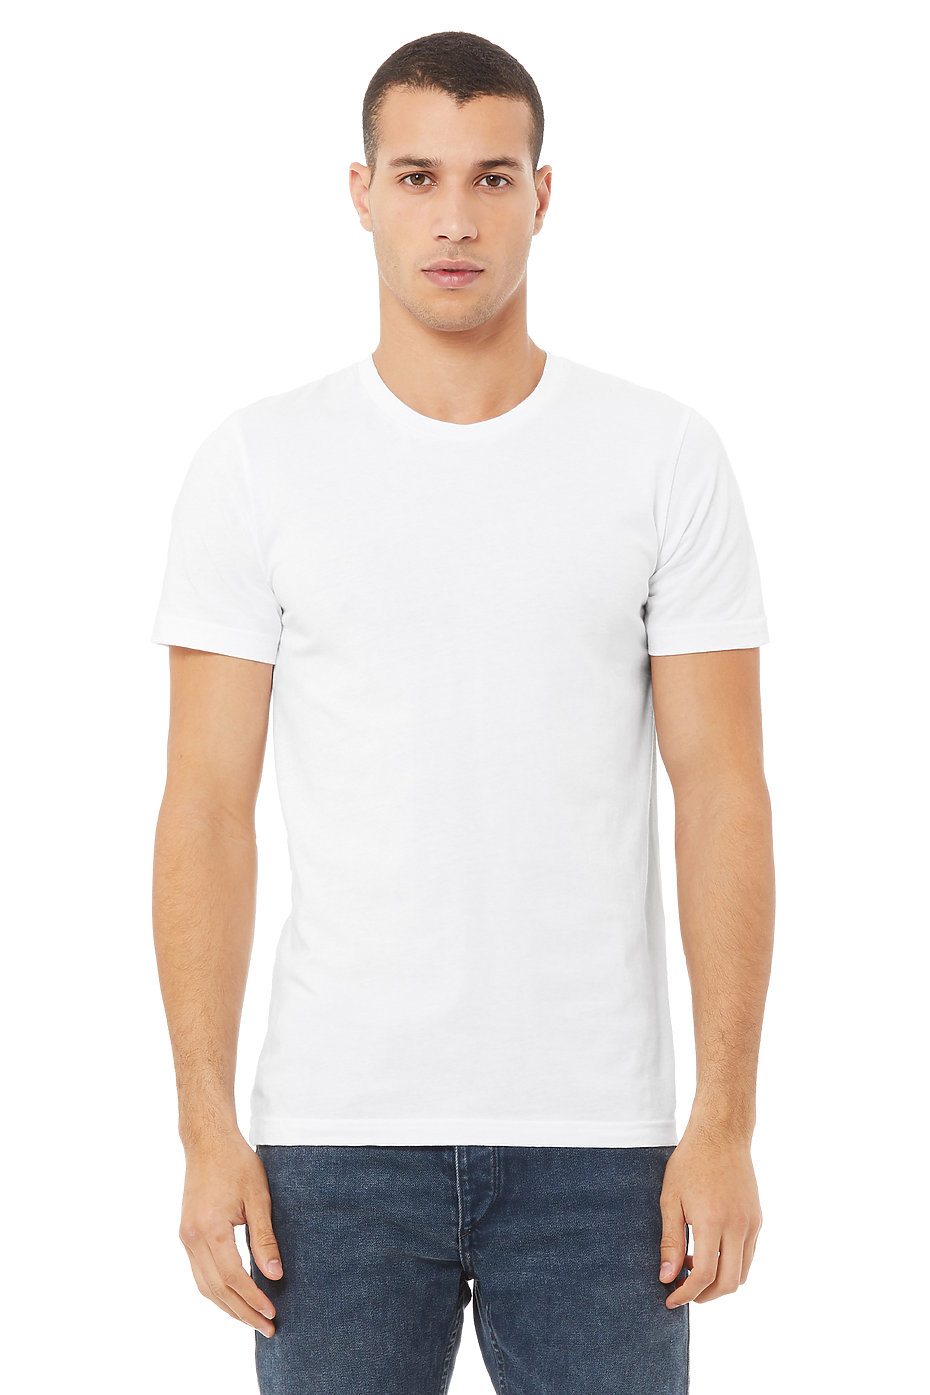 Jersey T Shirts, Mens Wholesale Clothing, Bulk, Plain Blank T Shirts